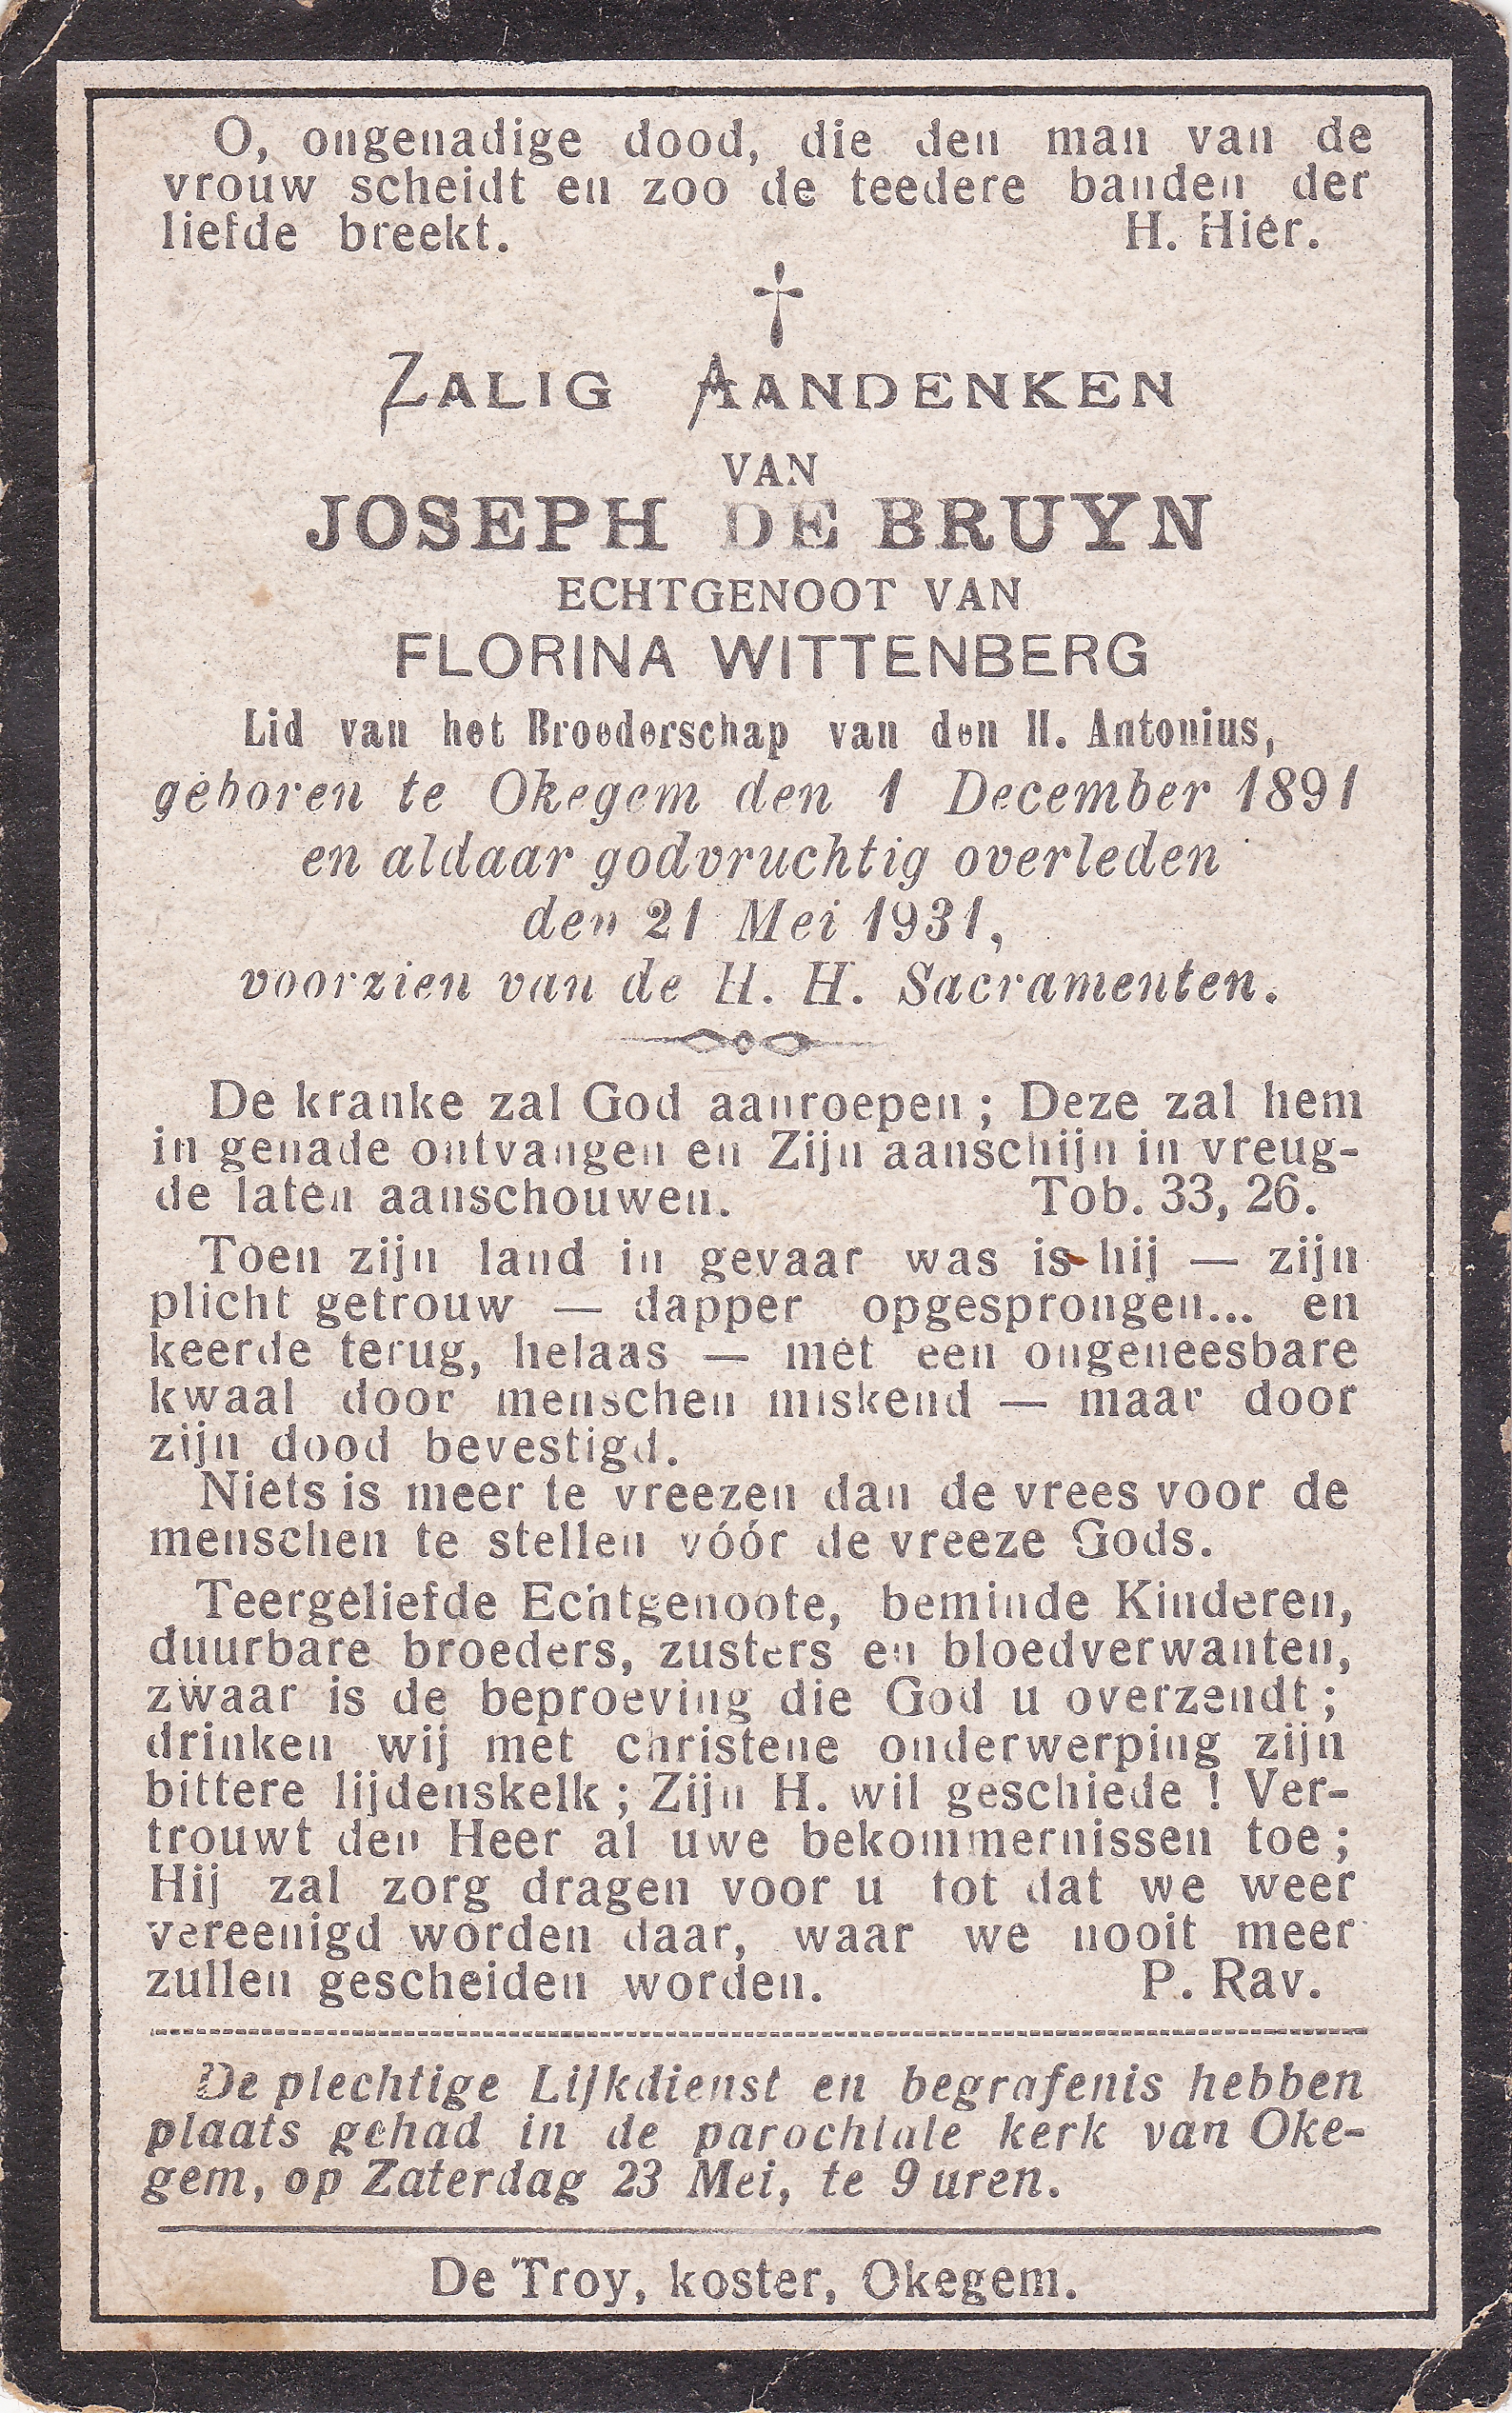 De Bruyn Joseph